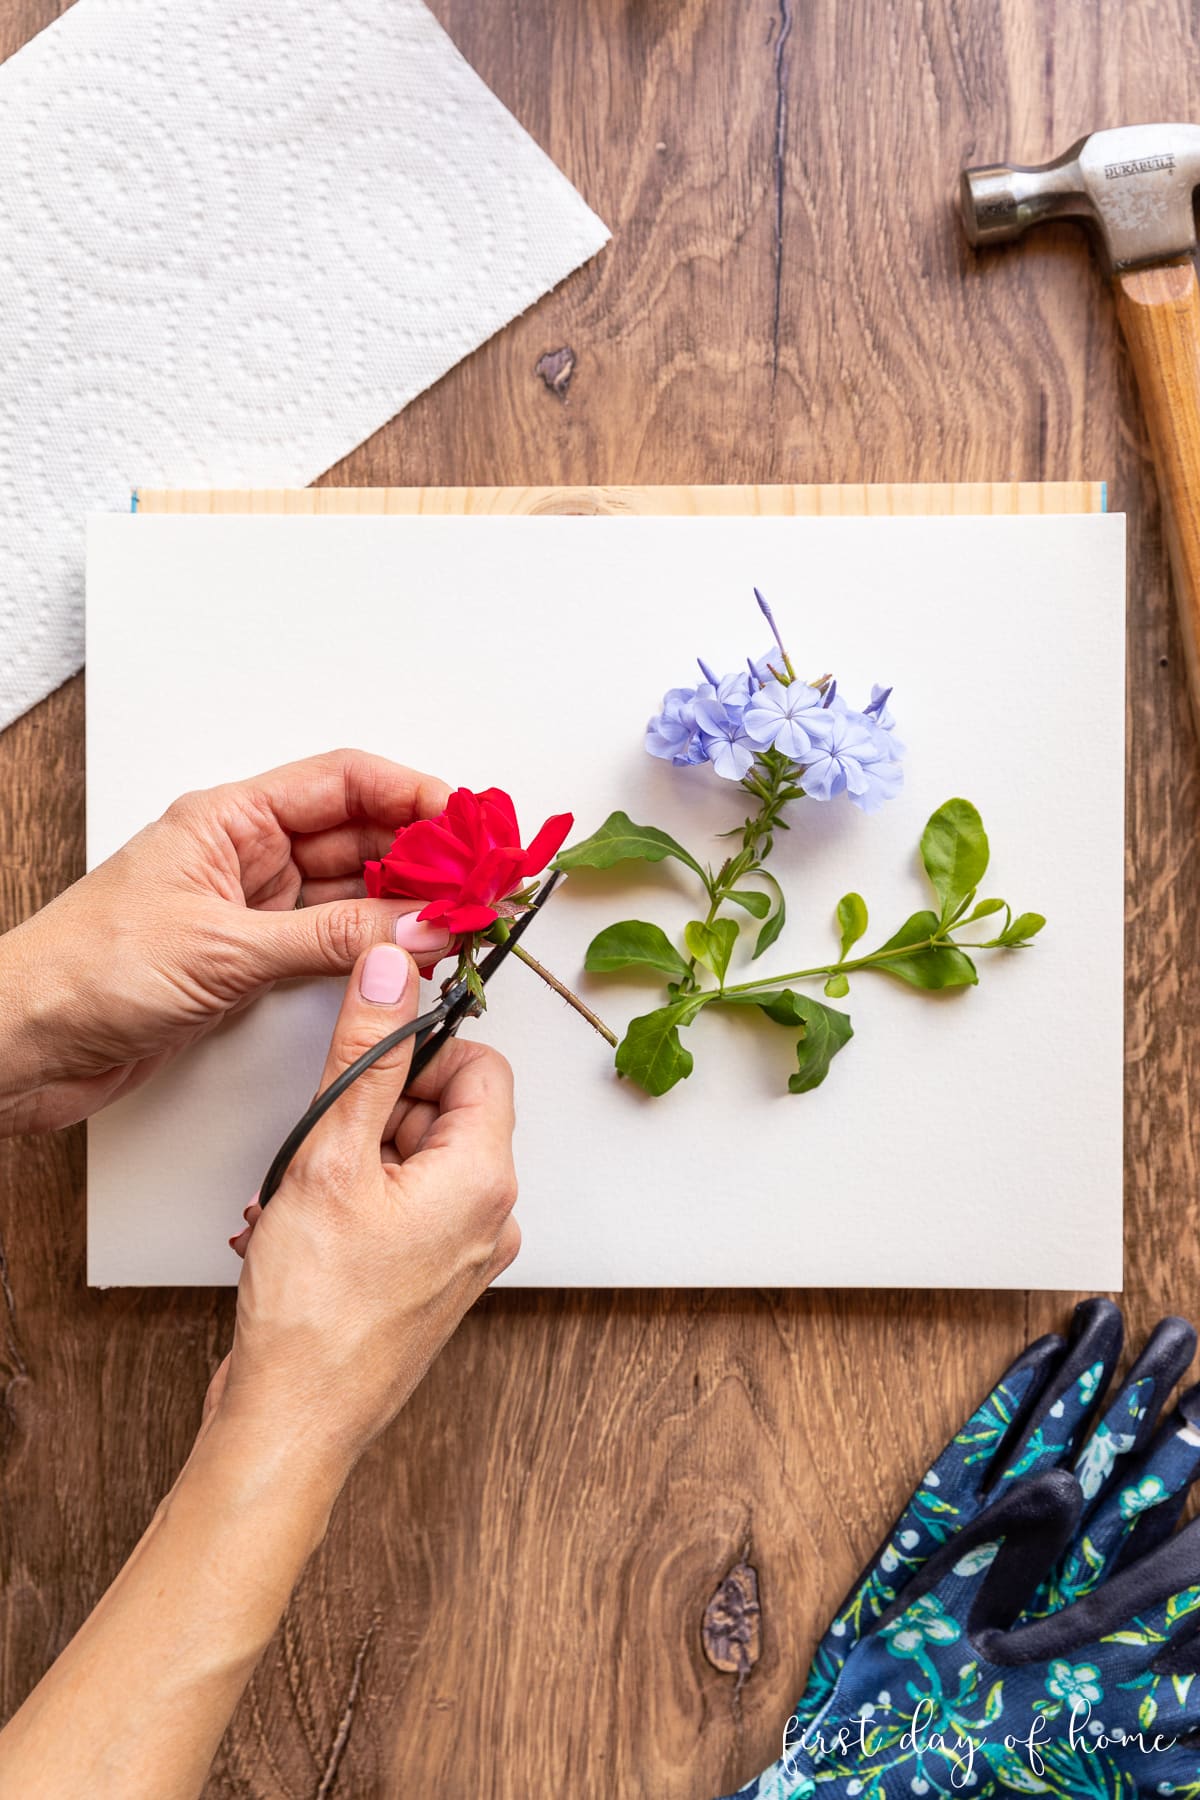 Arranging flowers on watercolor paper to make DIY hammered flower art